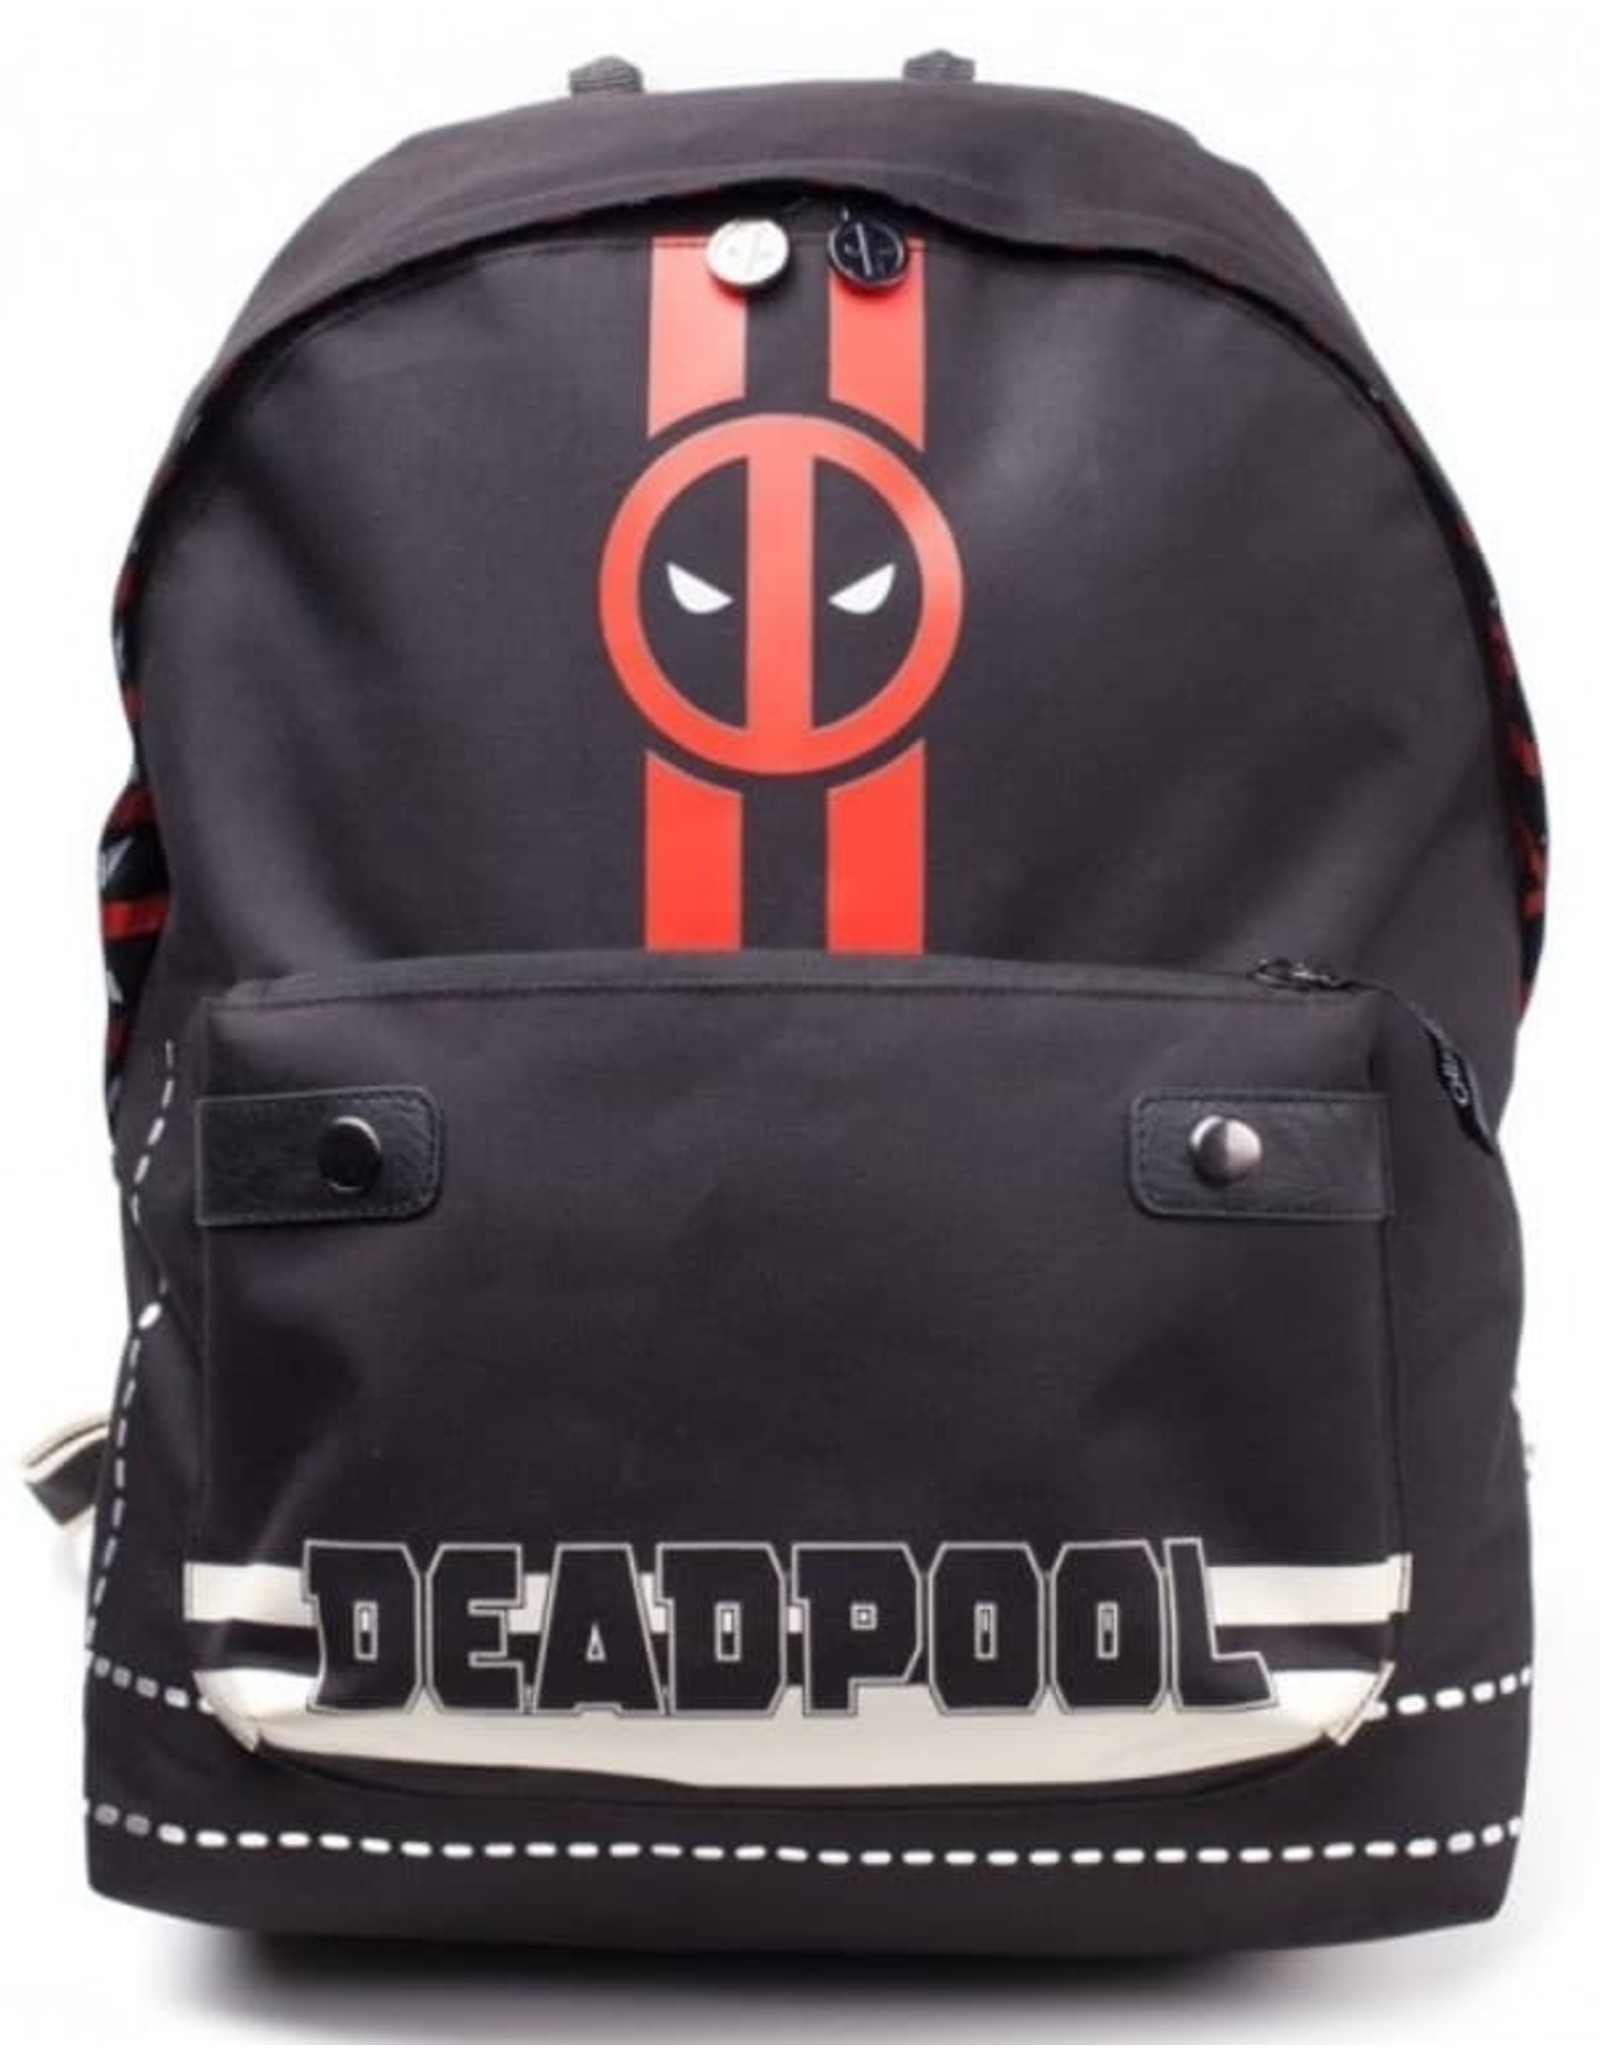 Marvel Marvel bags - Marvel Deadpool backpack